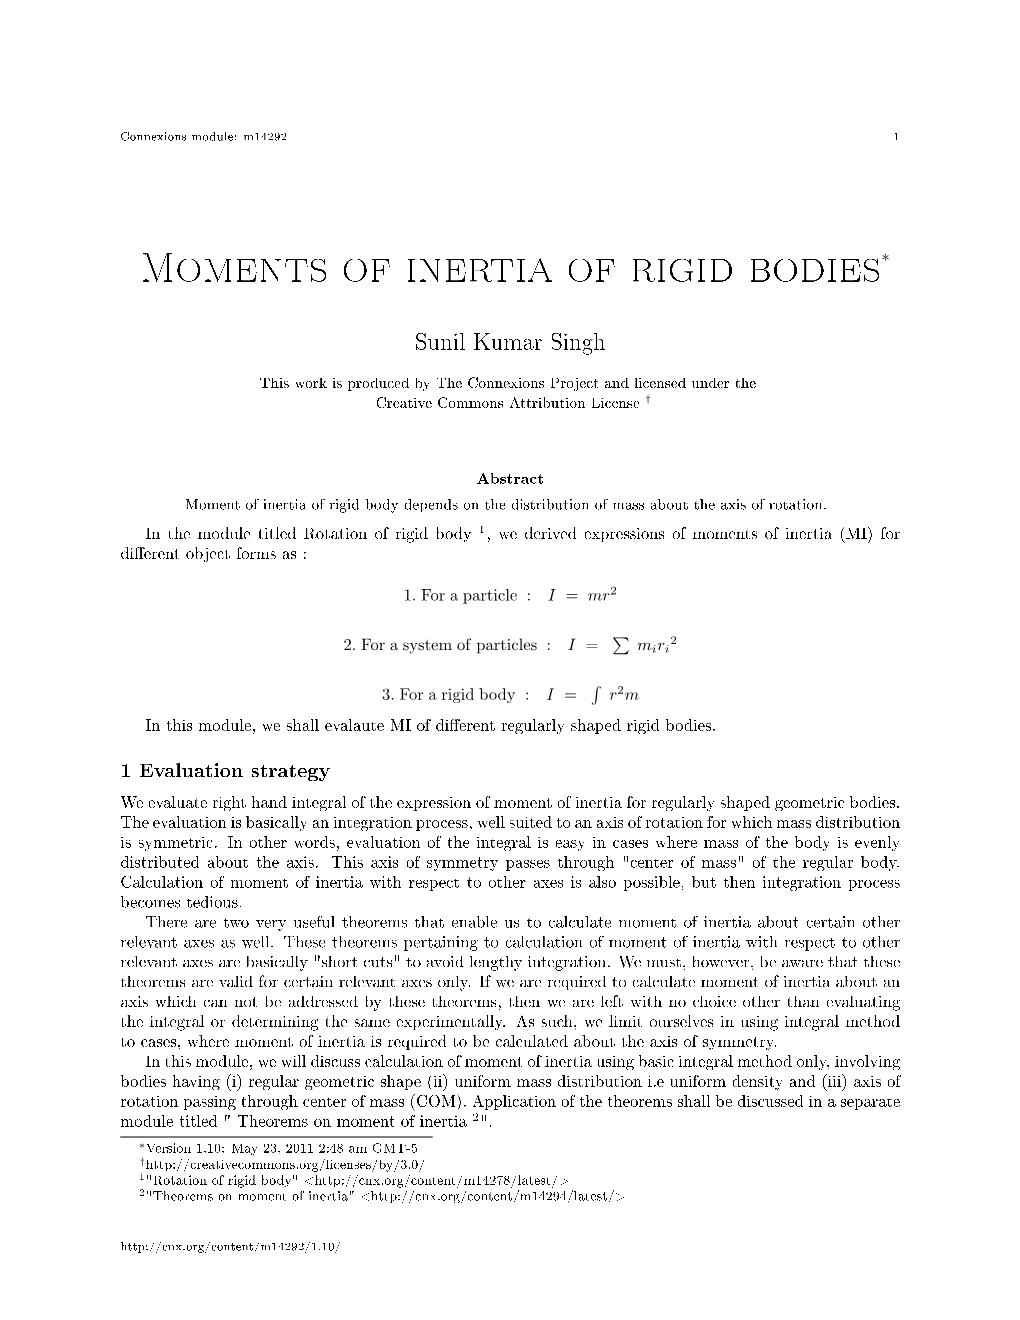 Moments of Inertia of Rigid Bodies∗